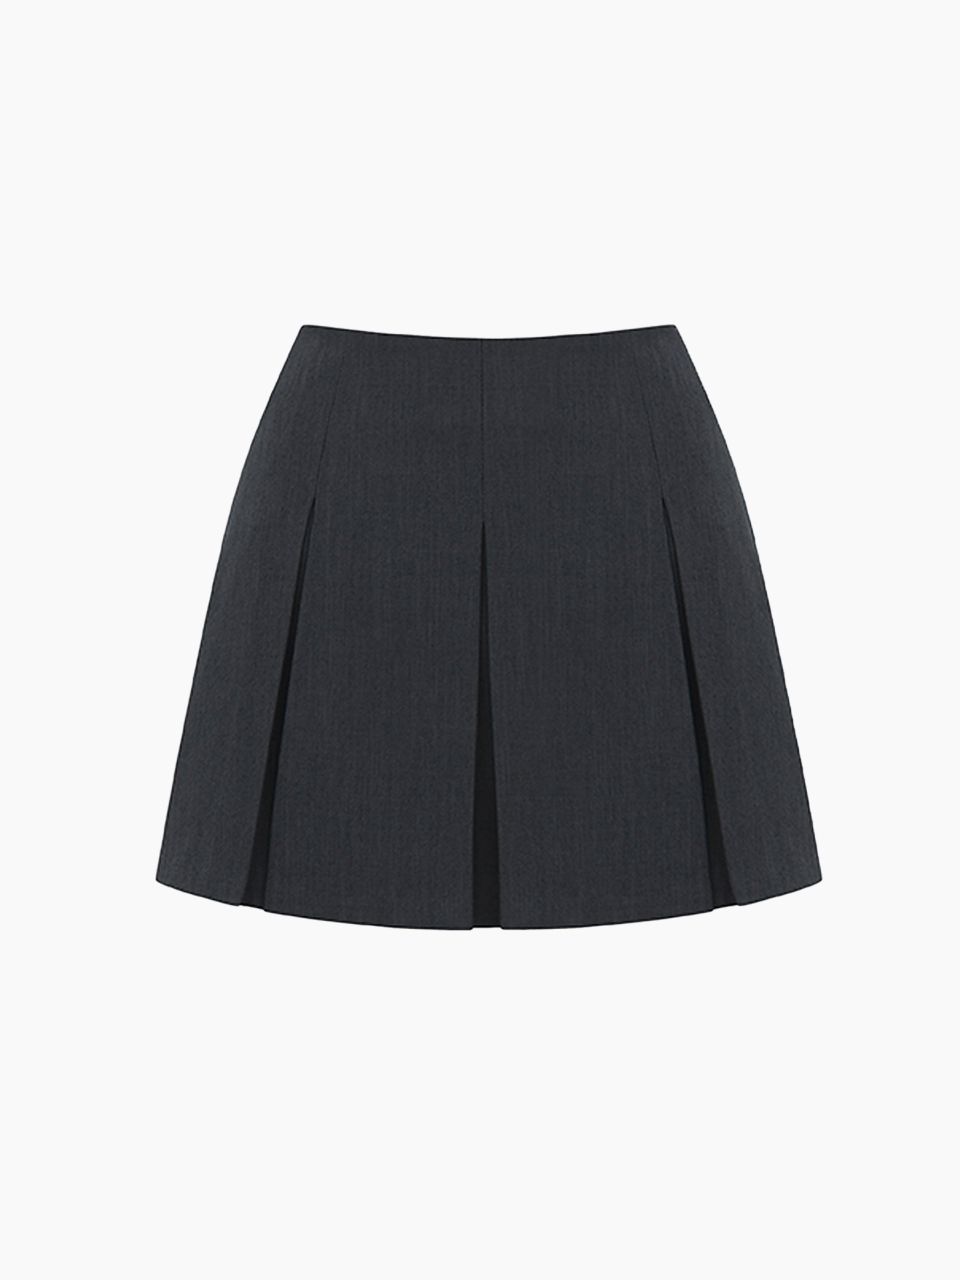 classic pleats skirt - dark gray